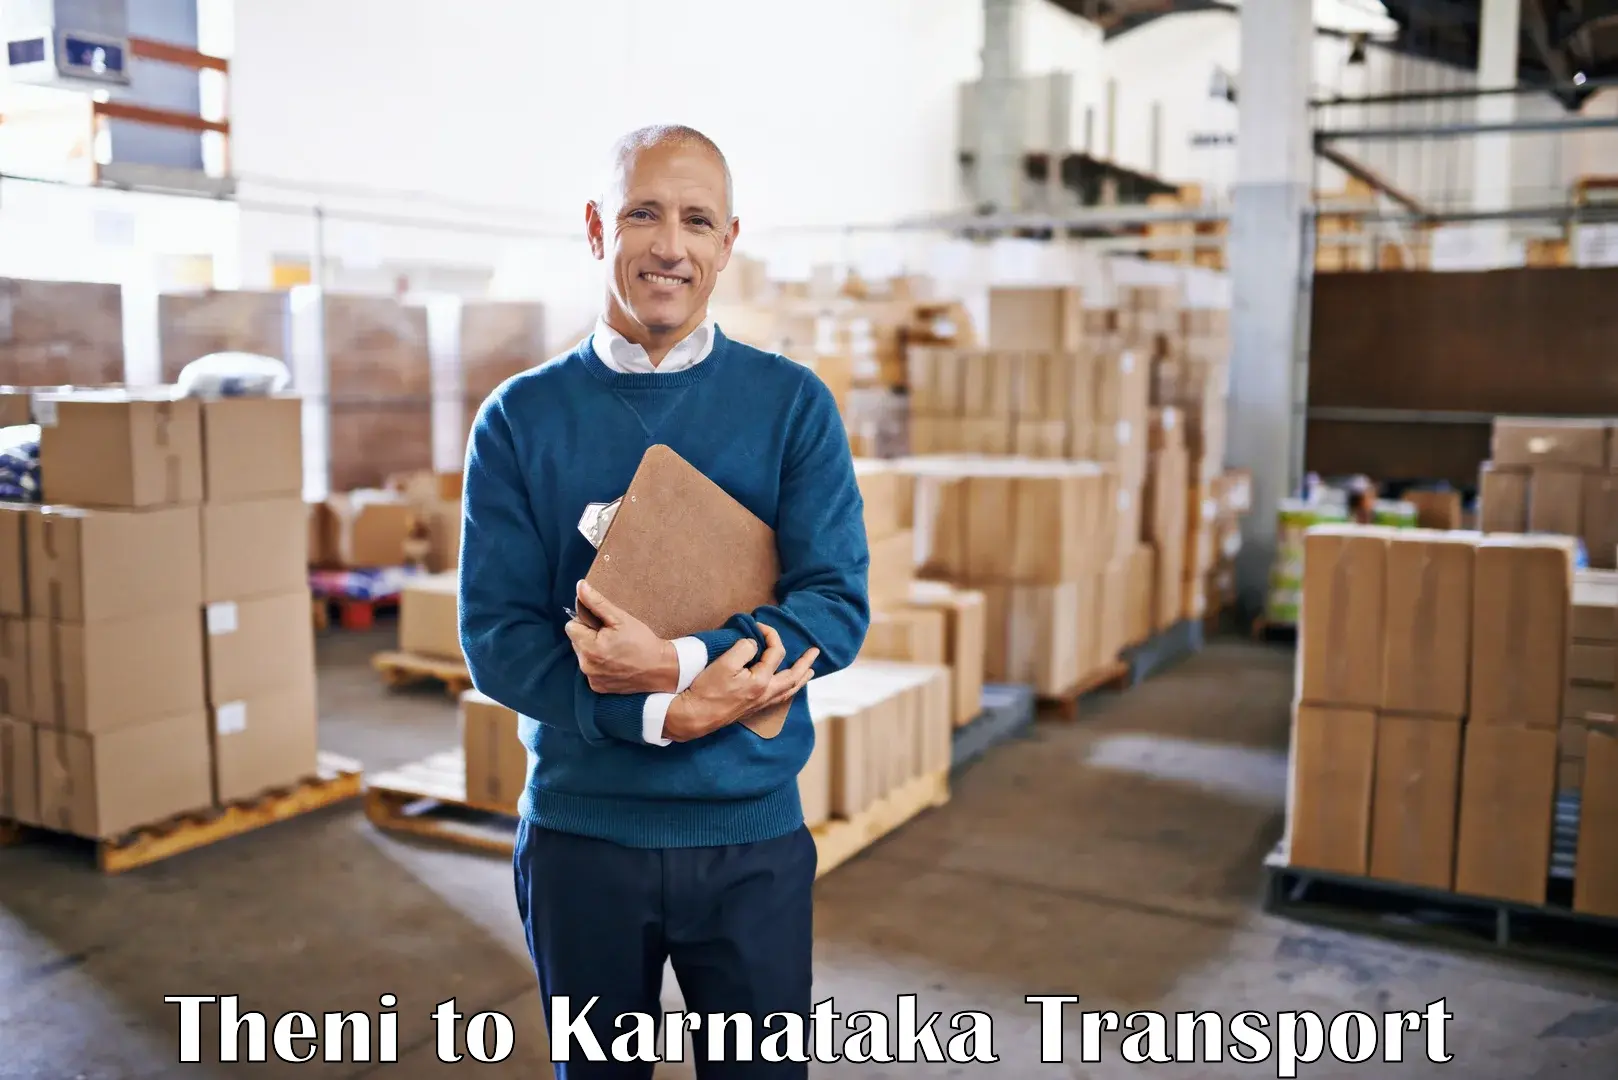 Delivery service Theni to Karnataka